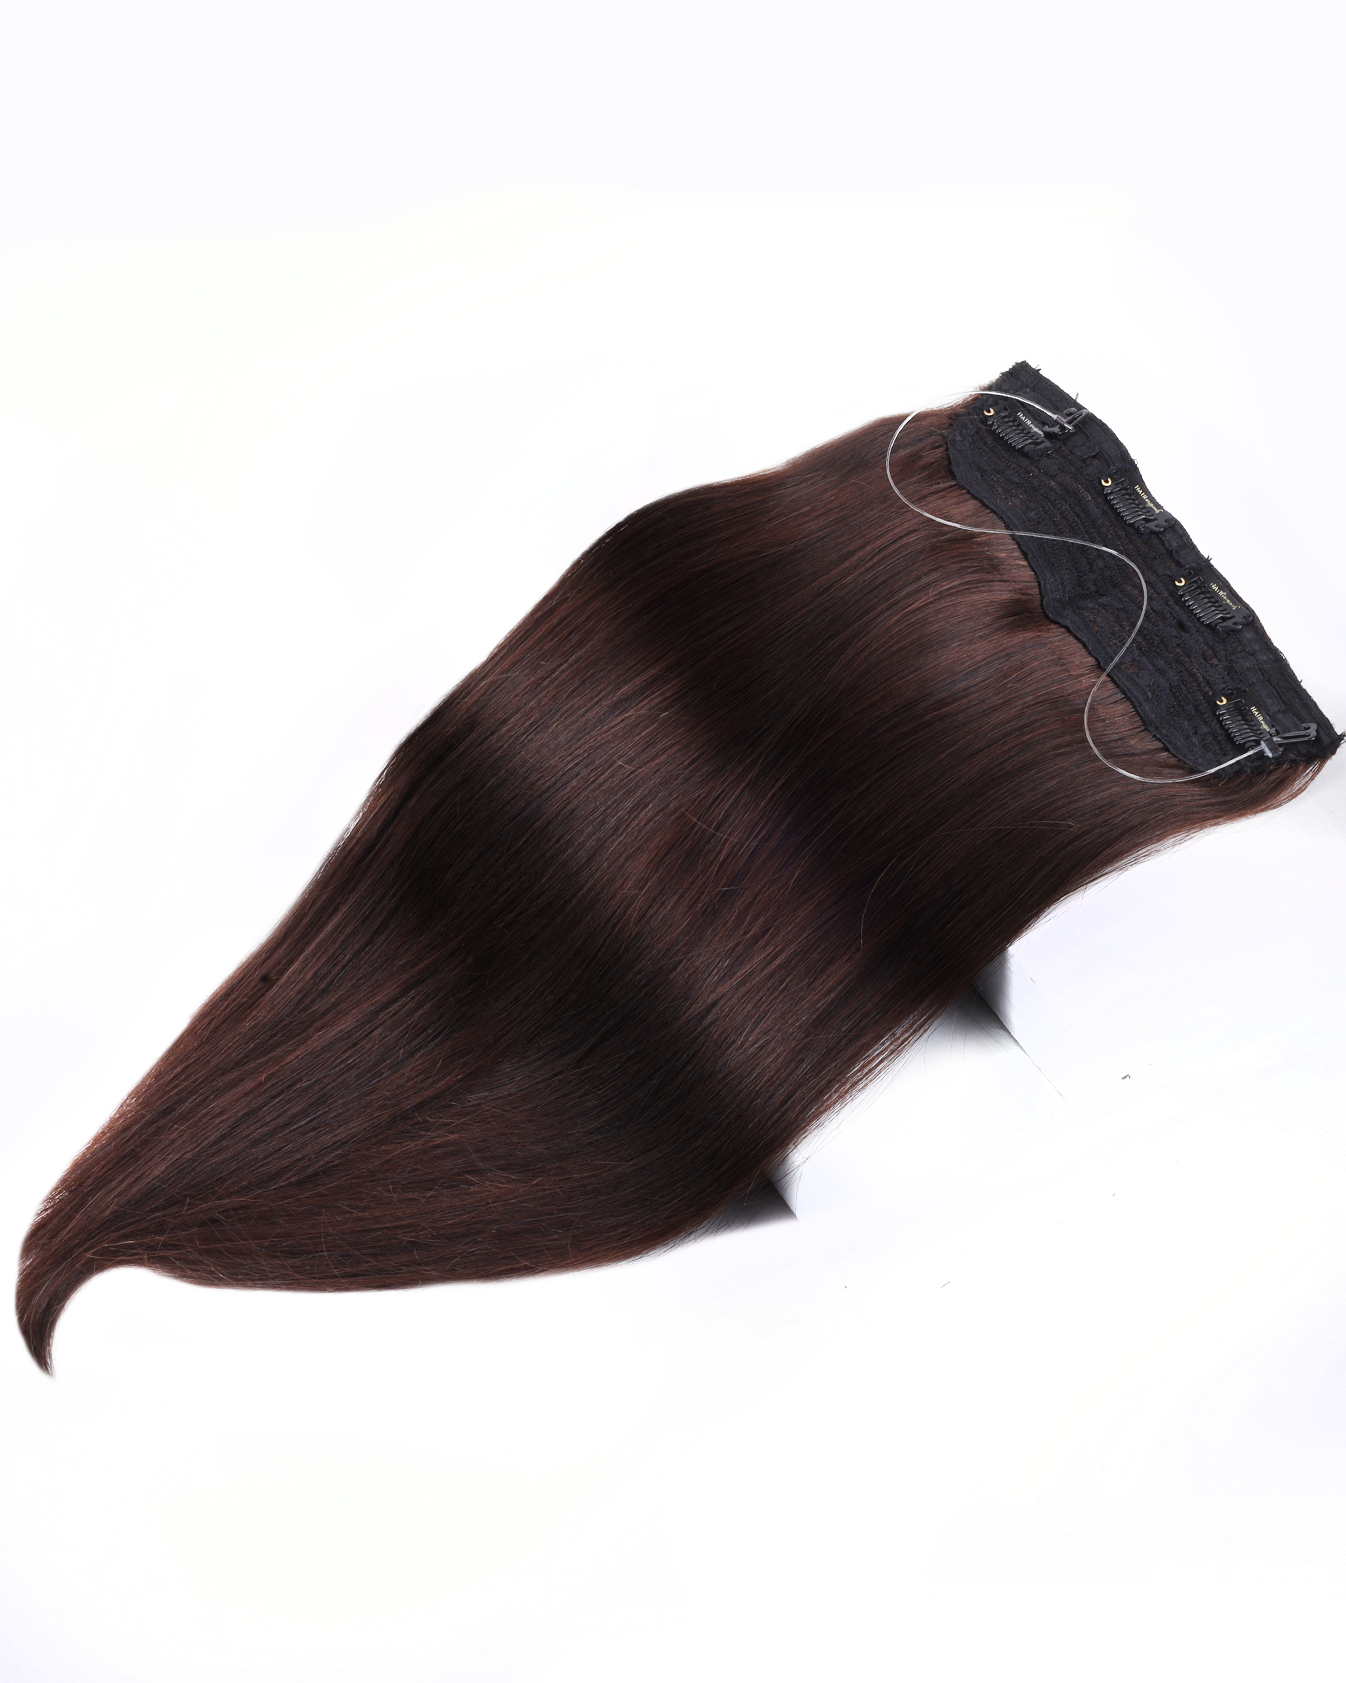 Halo Hair Extensions  HairOriginals Natural Brown Wavy 16 Inch